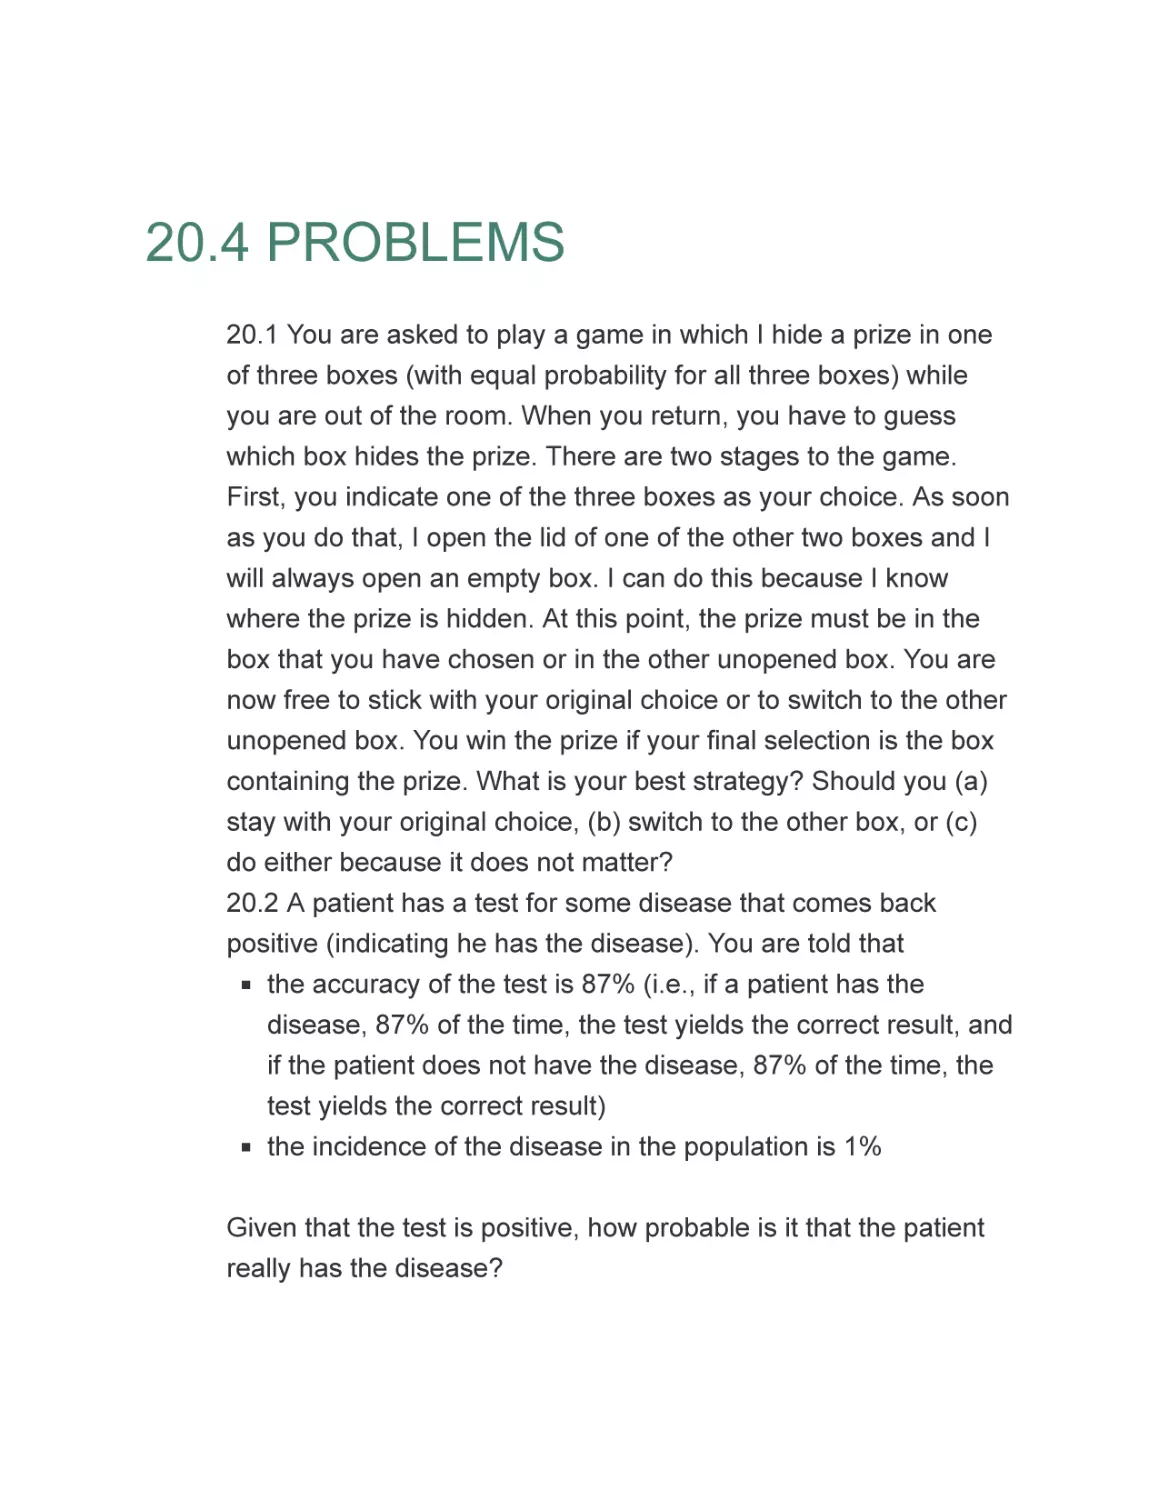 20.4 PROBLEMS